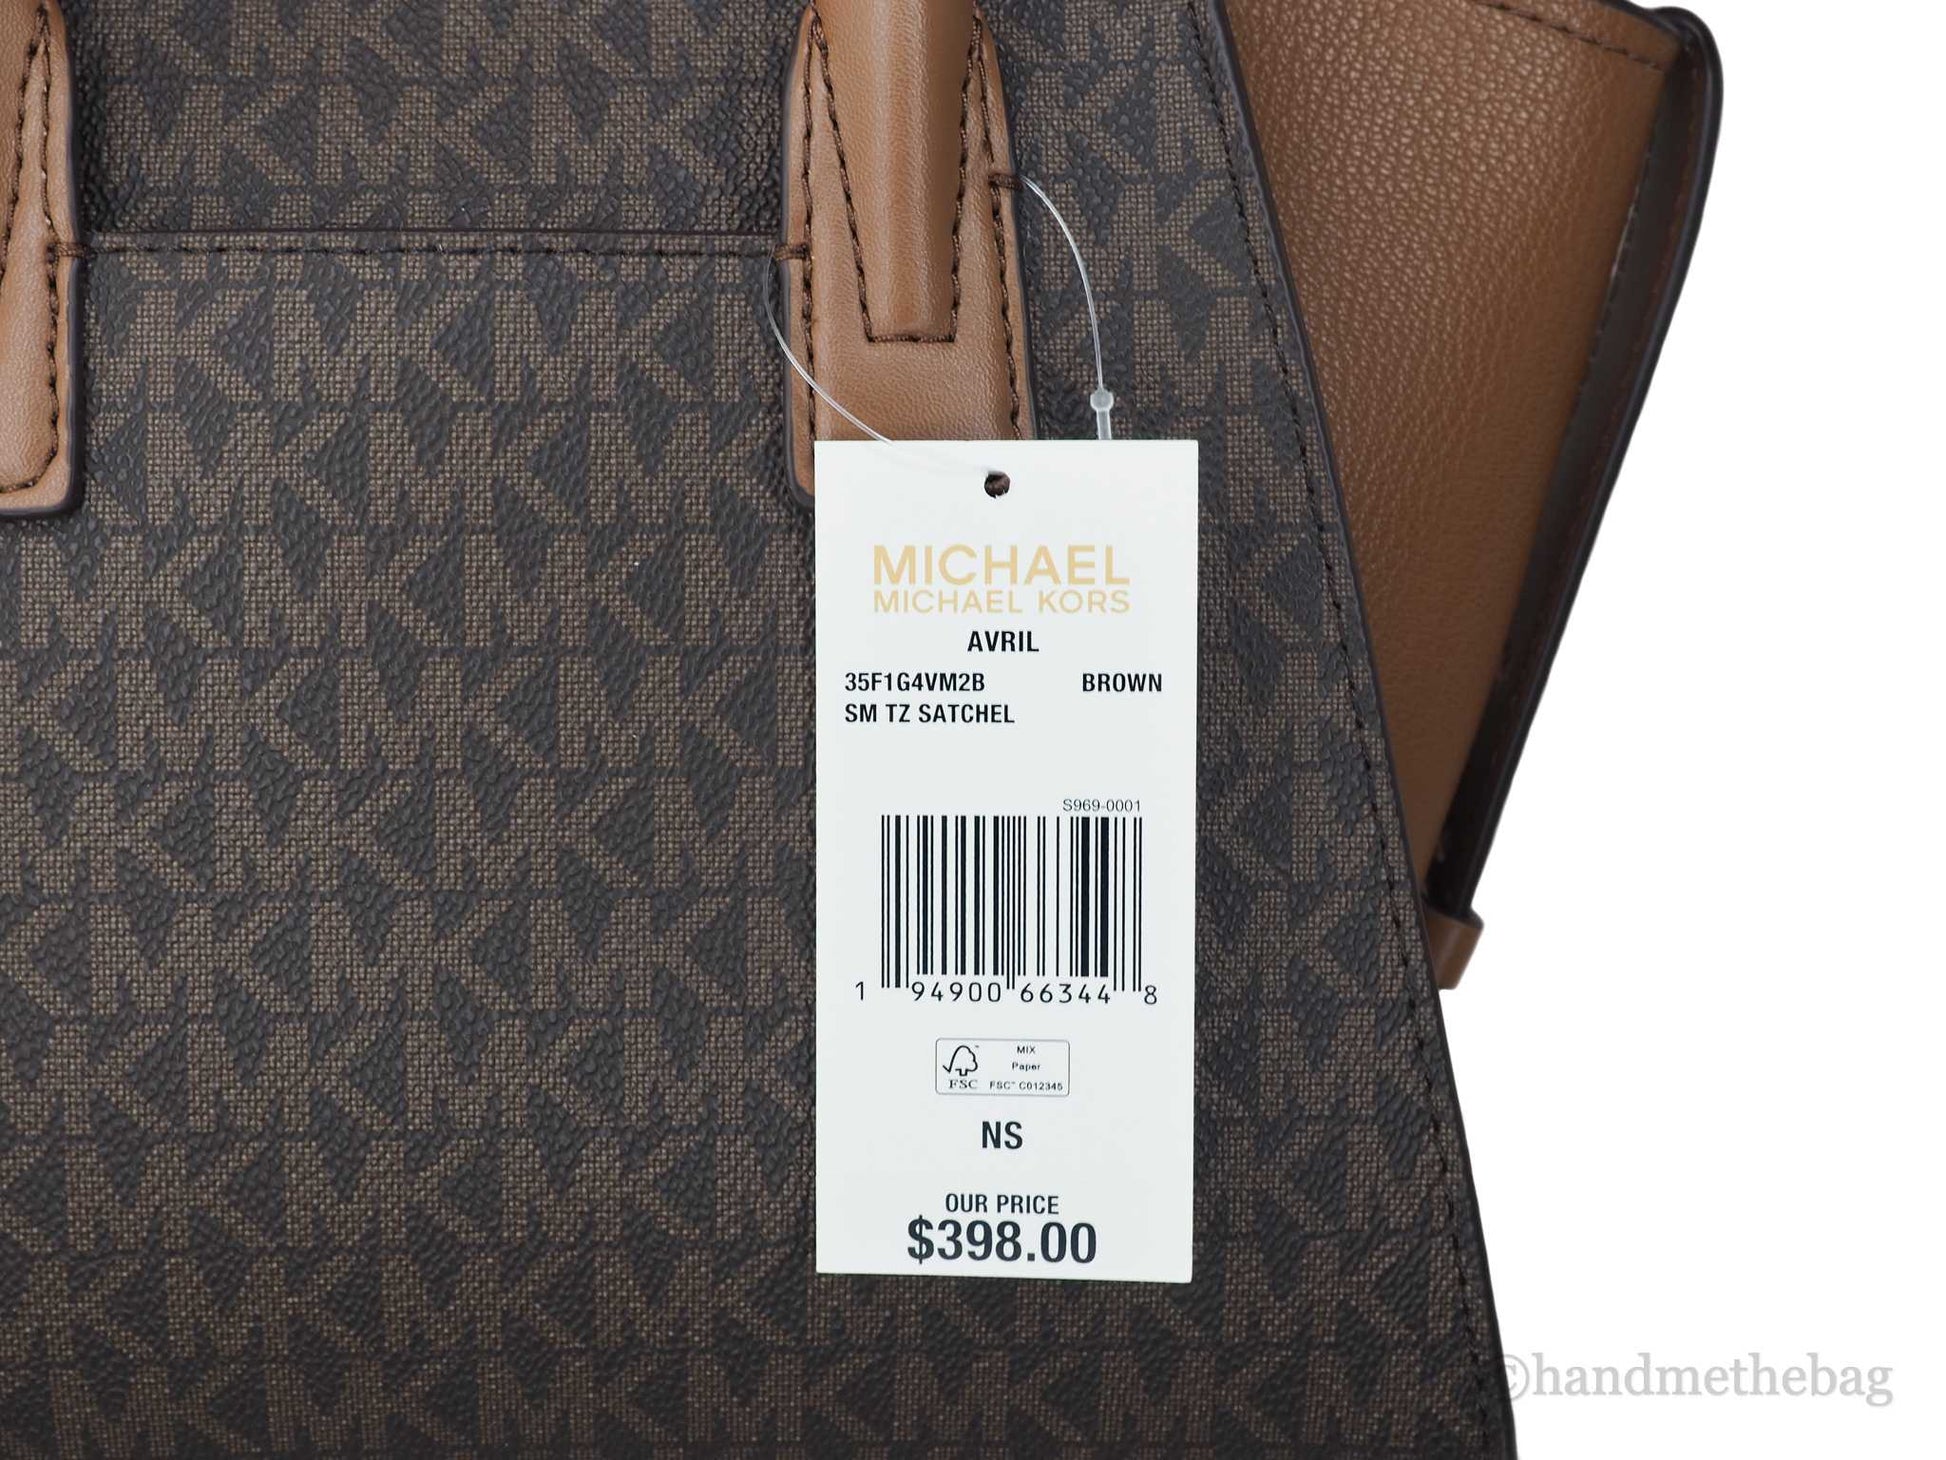 Michael Kors avril brown pvc satchel bag tag on white background